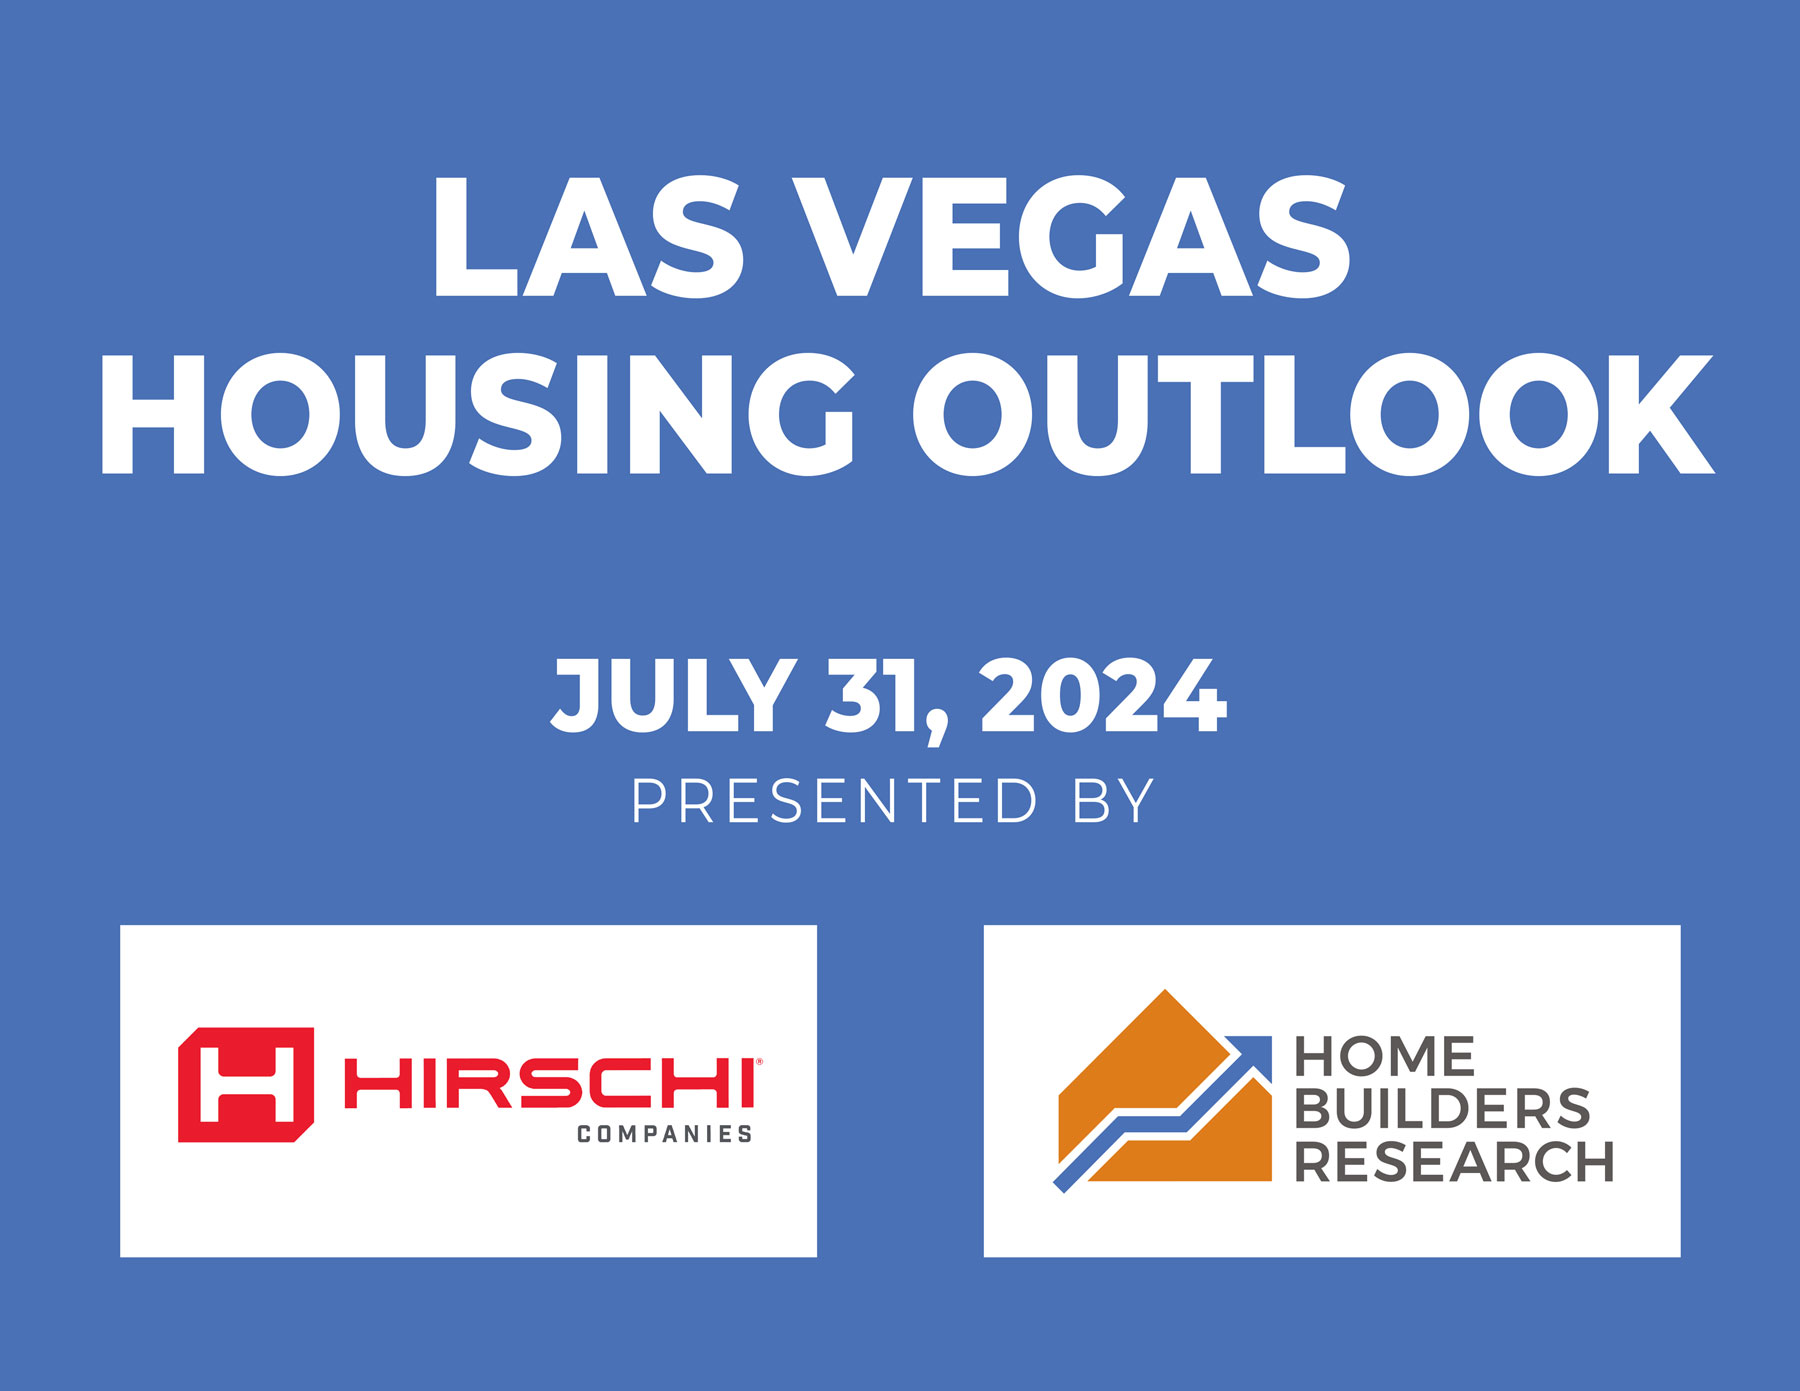 Las Vegas Housing Outlook 2024